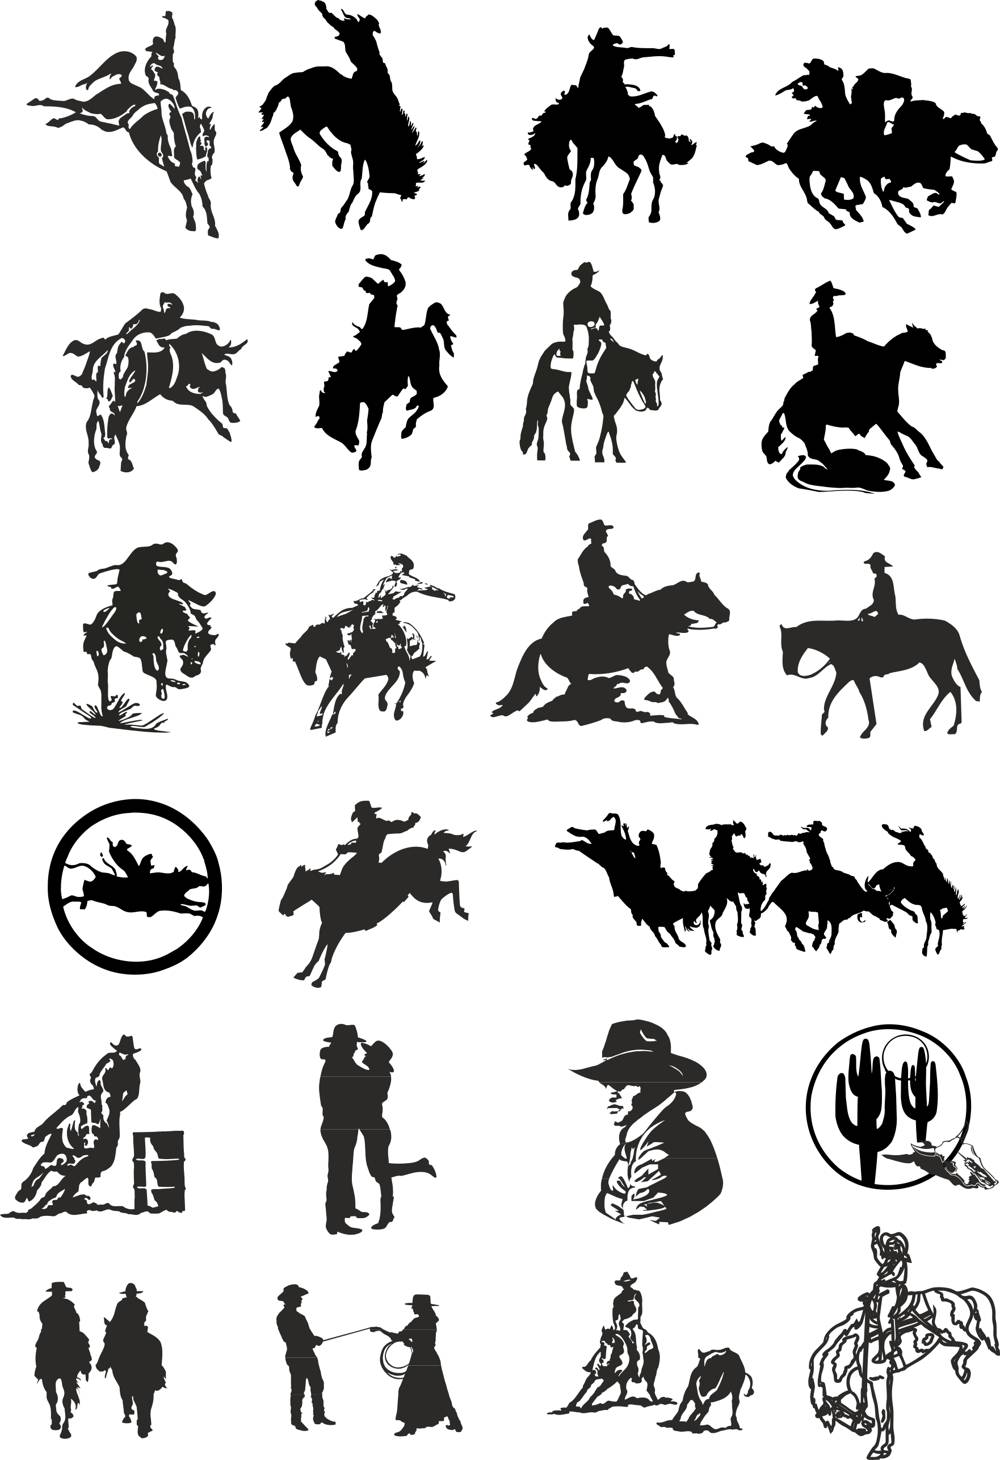 Cowboy silhouette vector set Free Vector cdr Download 3axis.co